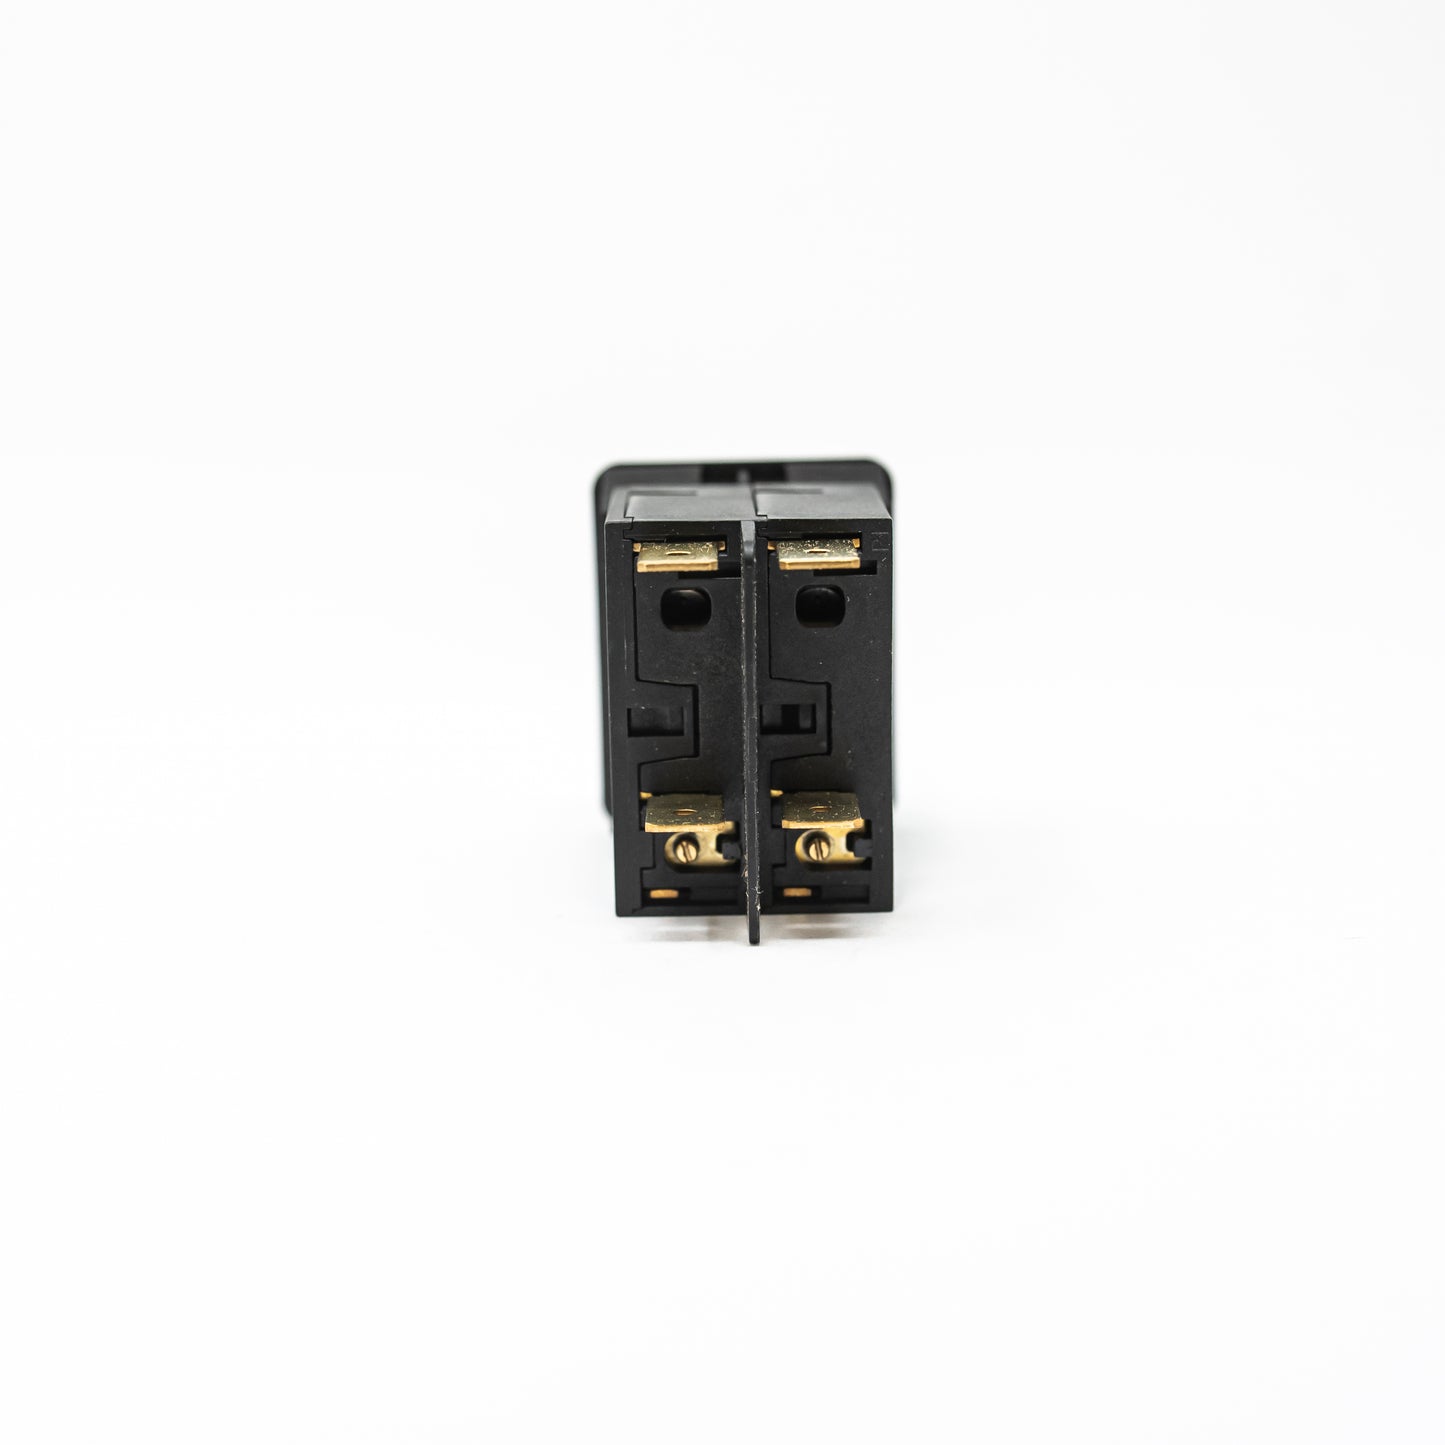 Black circuit breaker box with switch